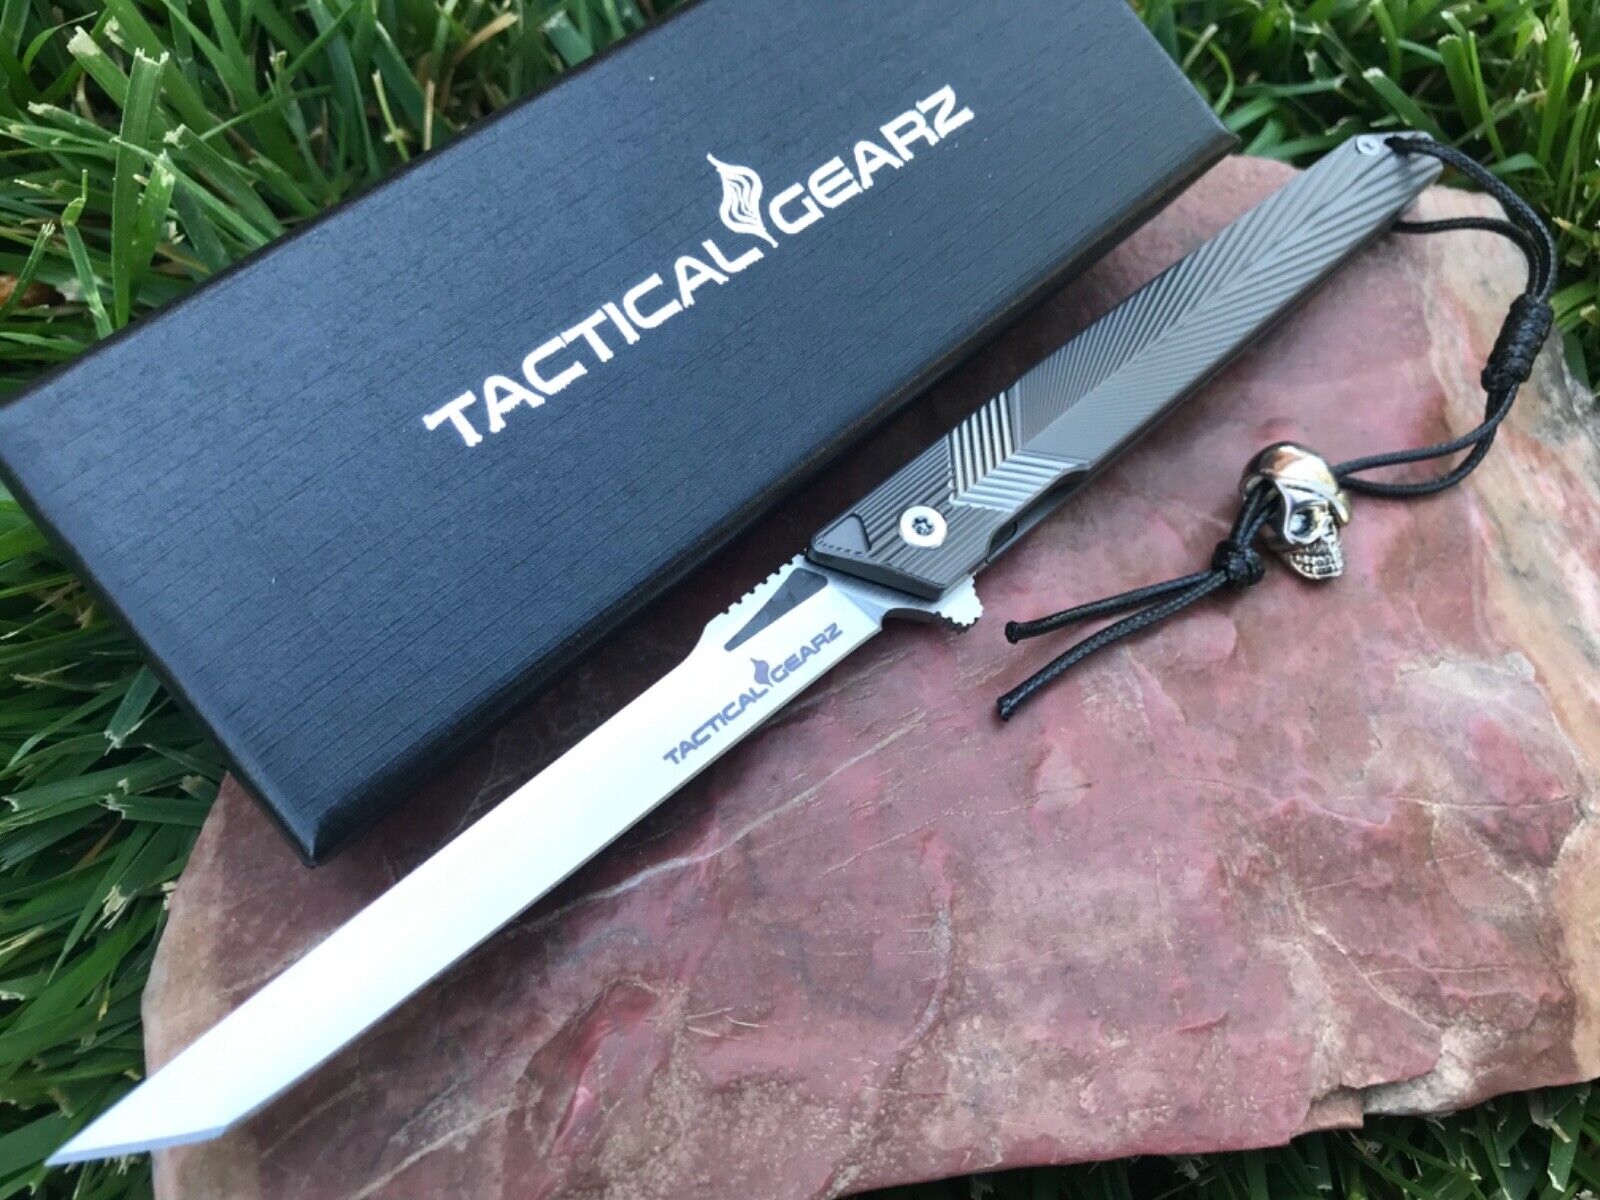 TacticalGearz Nox Tc4 Titanium EDC Pocket Knife Stainless Steel Tanto Blade